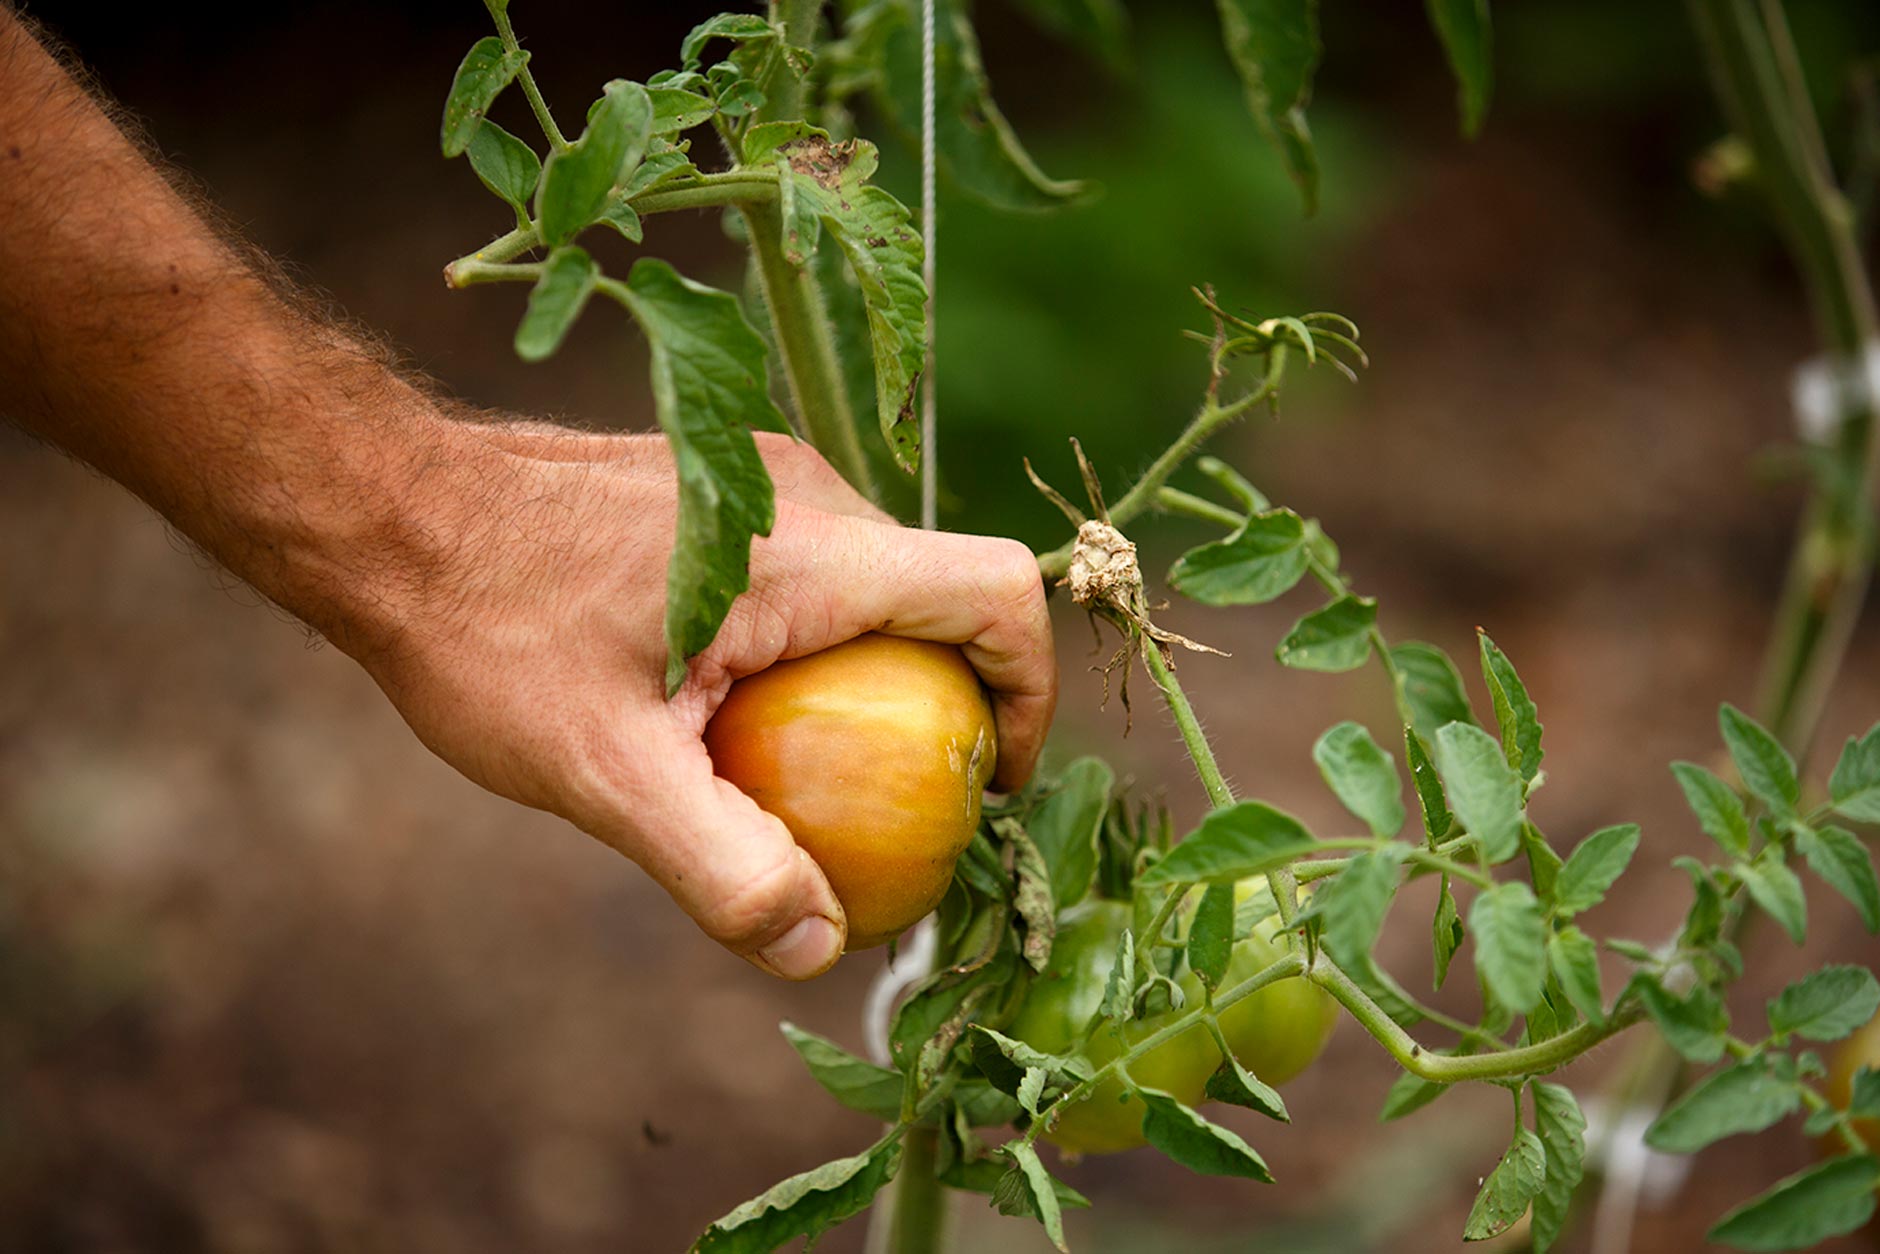 Indiana University Campus Farm Co-Director James Farmer picks heirloom tomatoes at the farm on Friday, Sept. 7, 2018. (James Brosher/IU Communications)